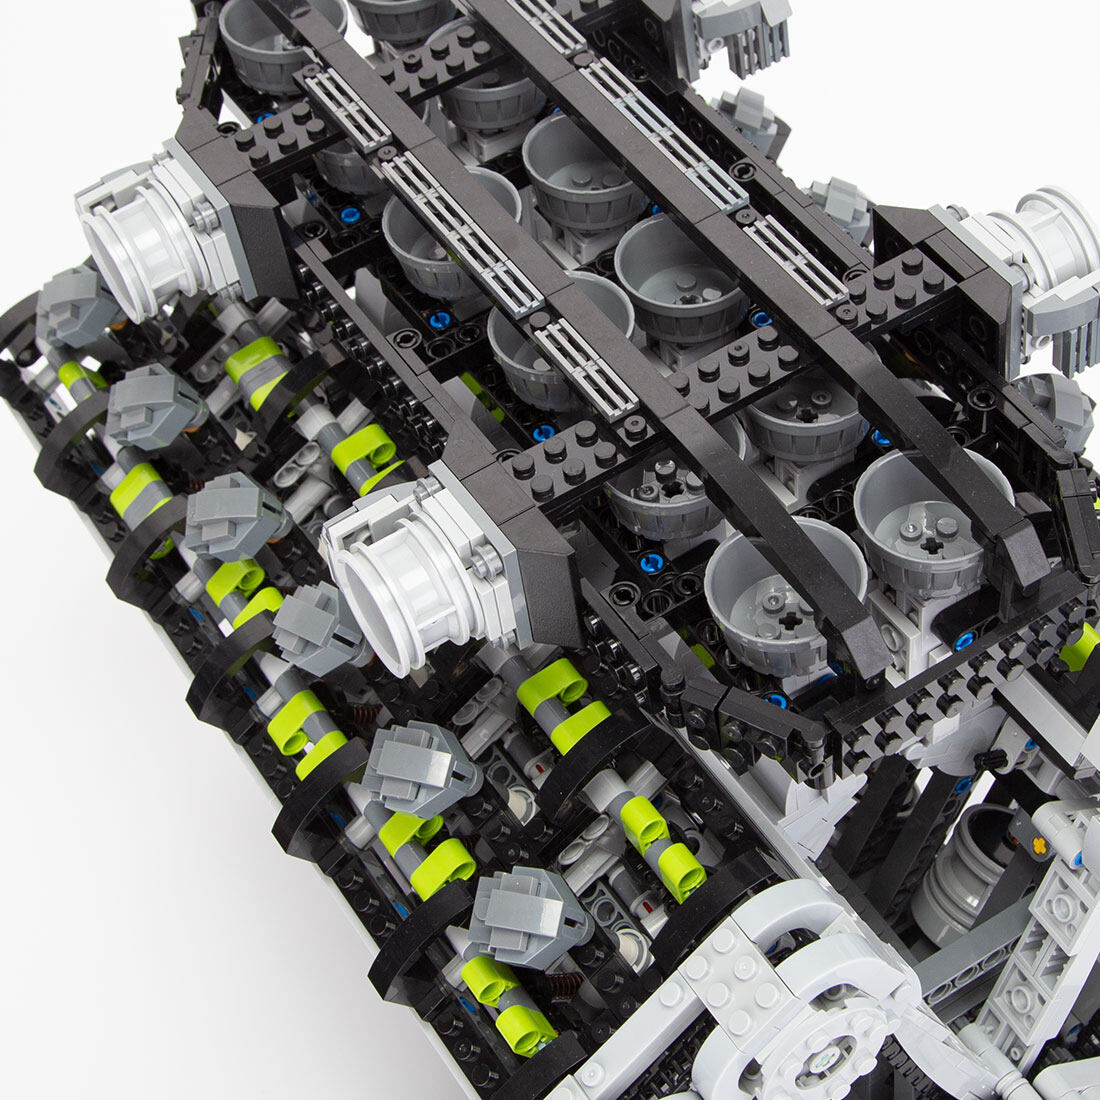 6.5L Quad Cam 60° V12 Cylinder Mid-Speed Engine Small Particle Building Blocks Set (3679PCS) enginediyshop